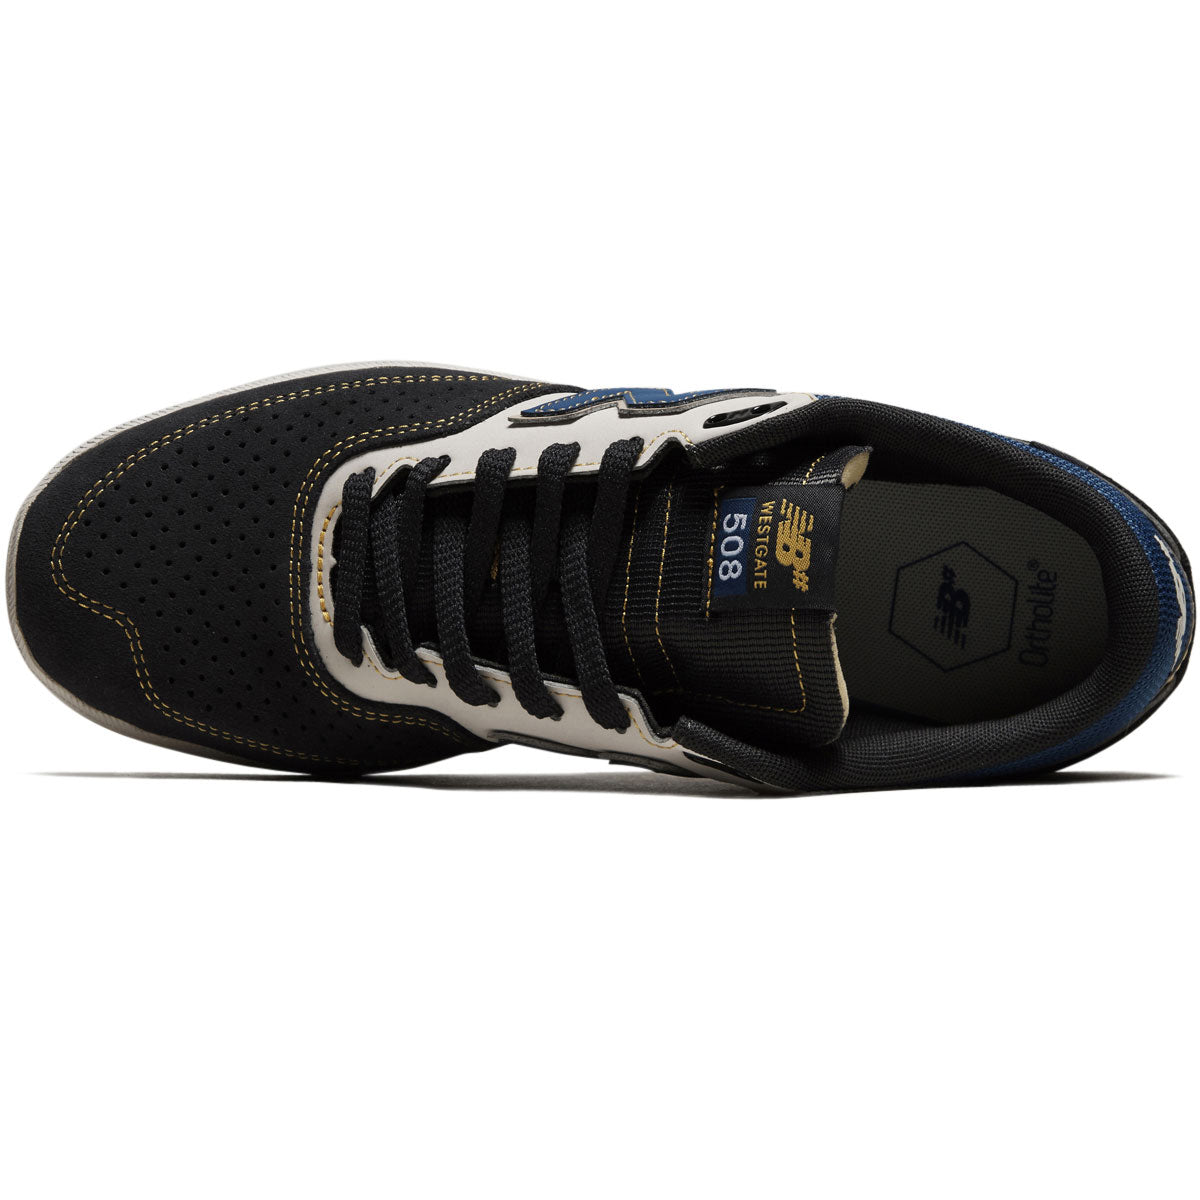 New Balance 508 Westgate Shoes - Navy/Tan image 3